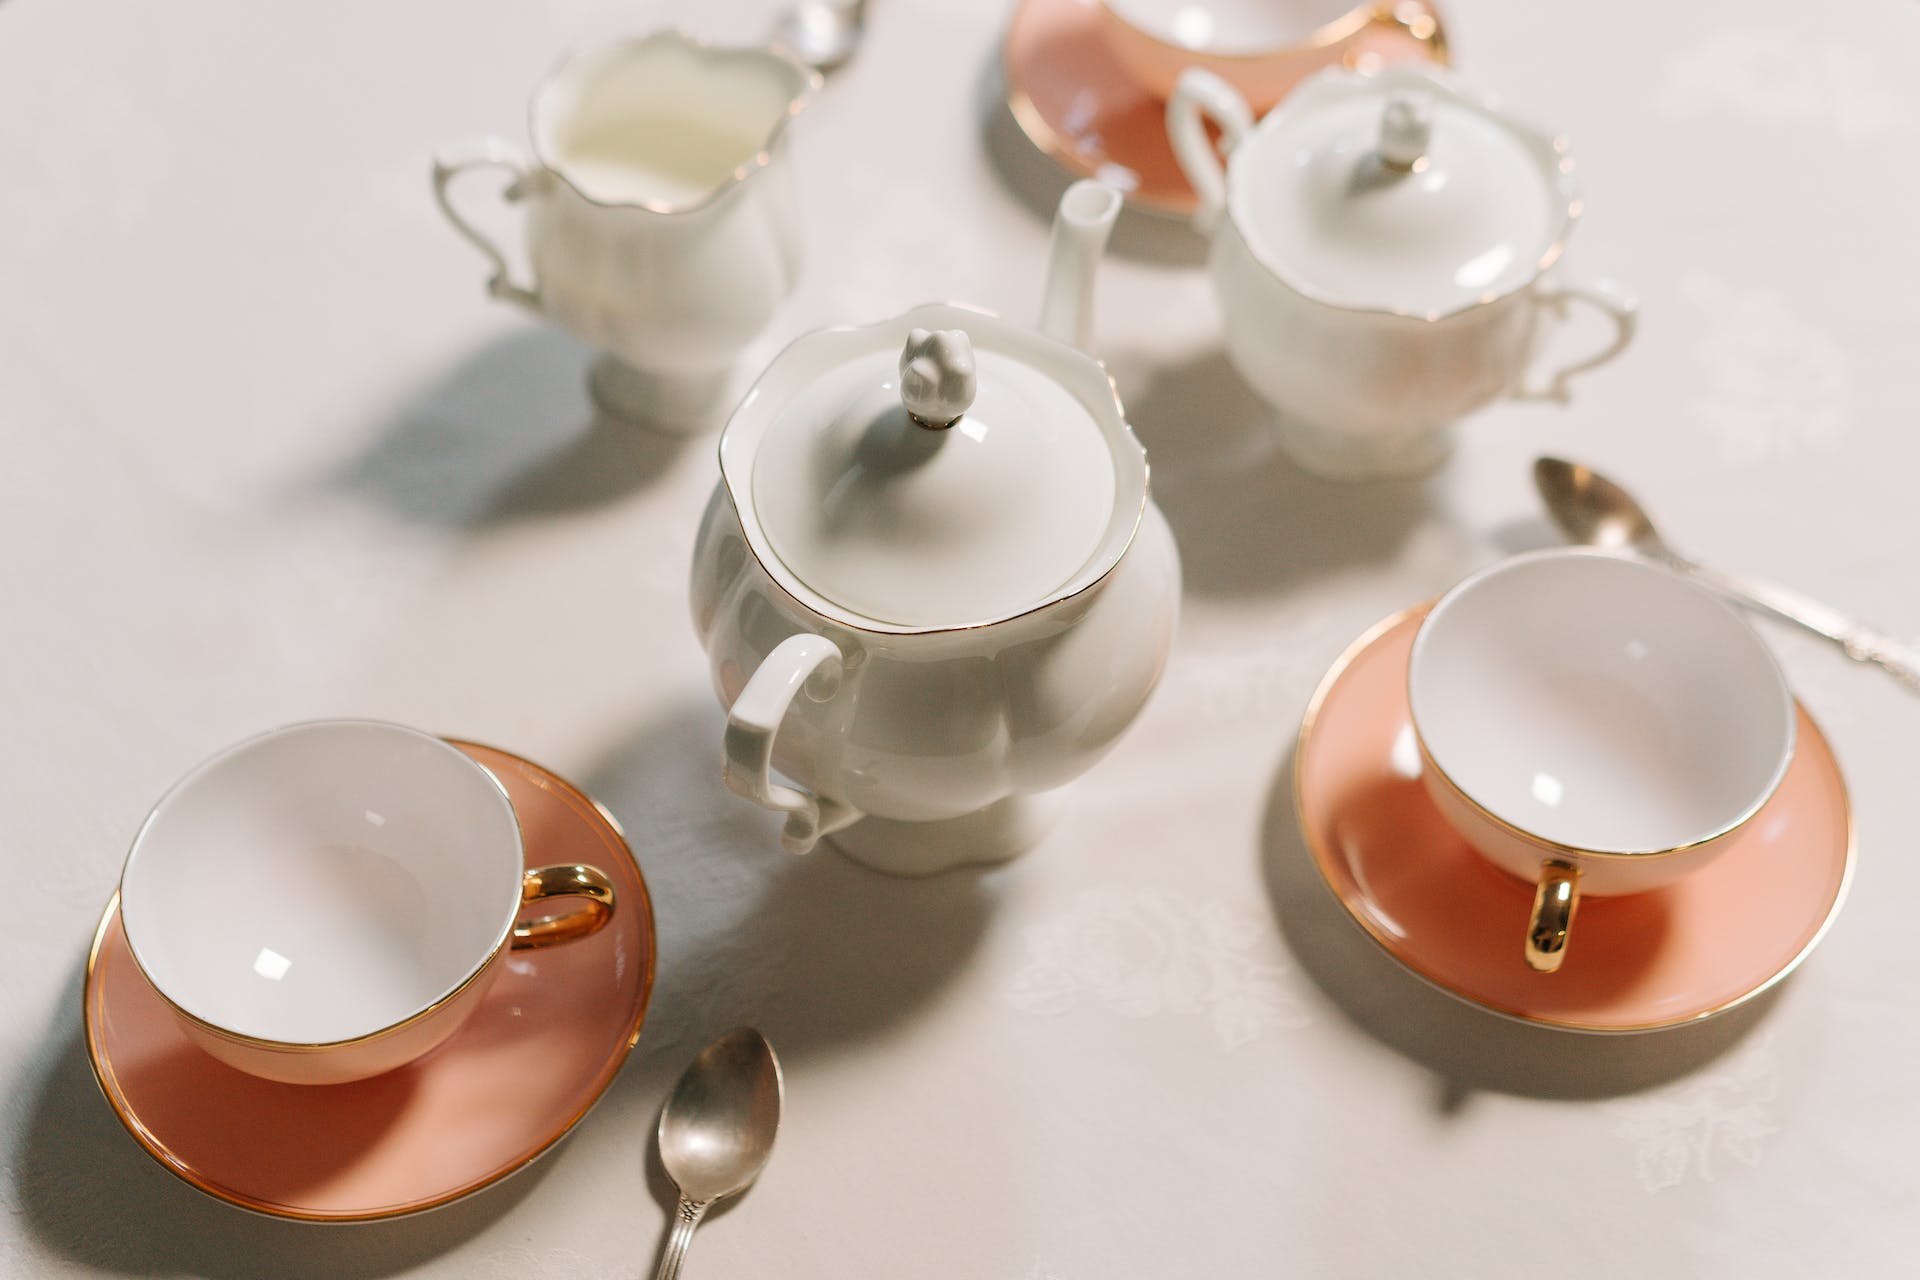 Pink and White Tea Set. | Source: Pexels